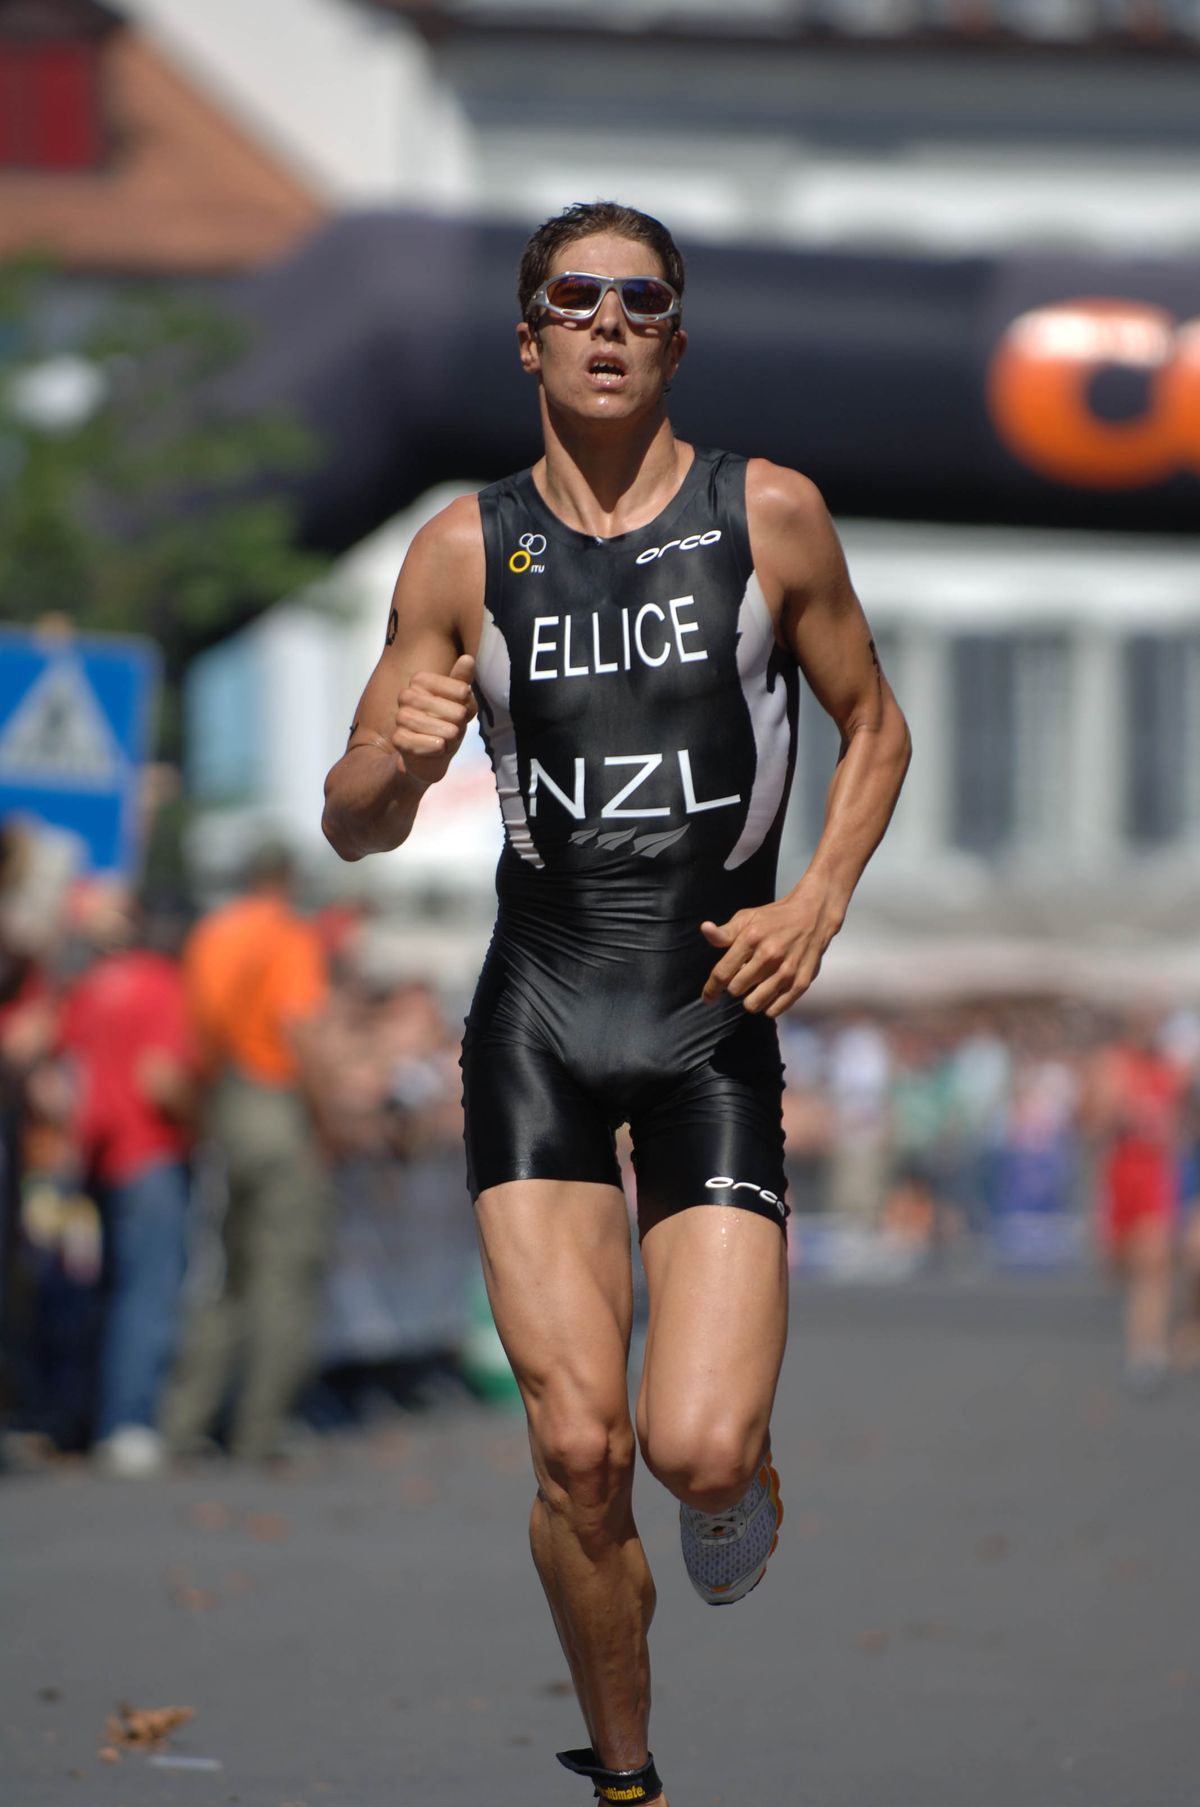 Clark Ellice – Leading male triathlete with incredible diversity